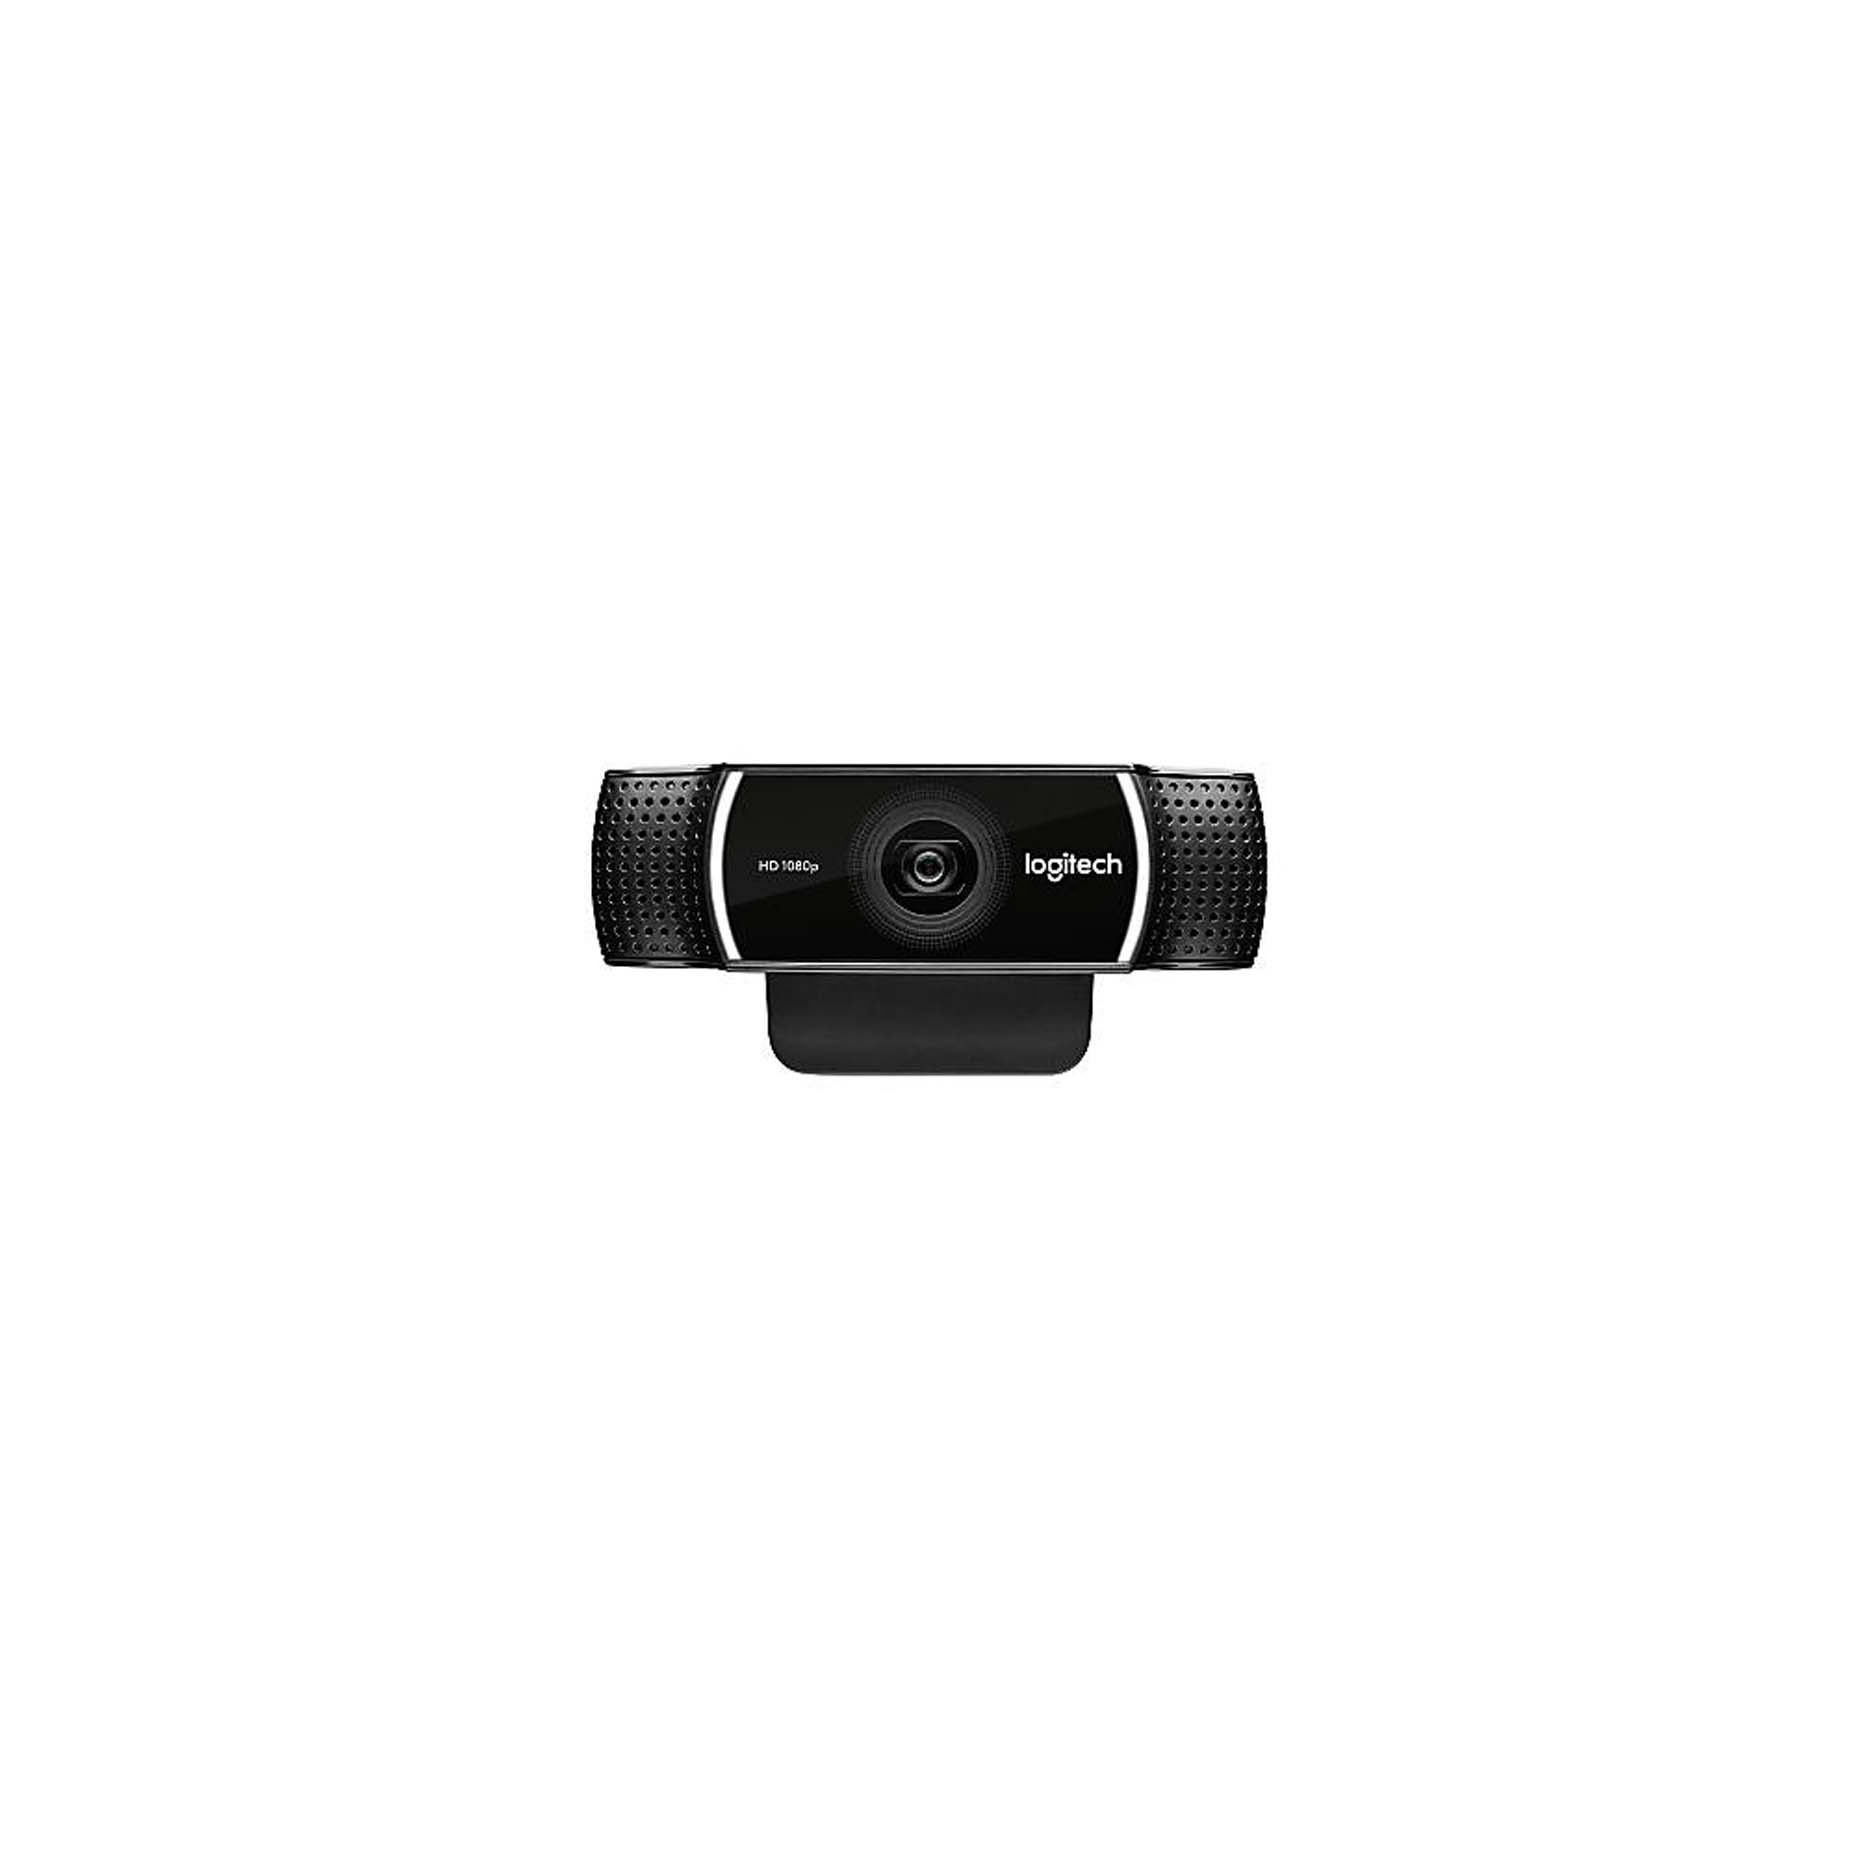 Harga Jual Logitech C922 Pro Stream Webcam